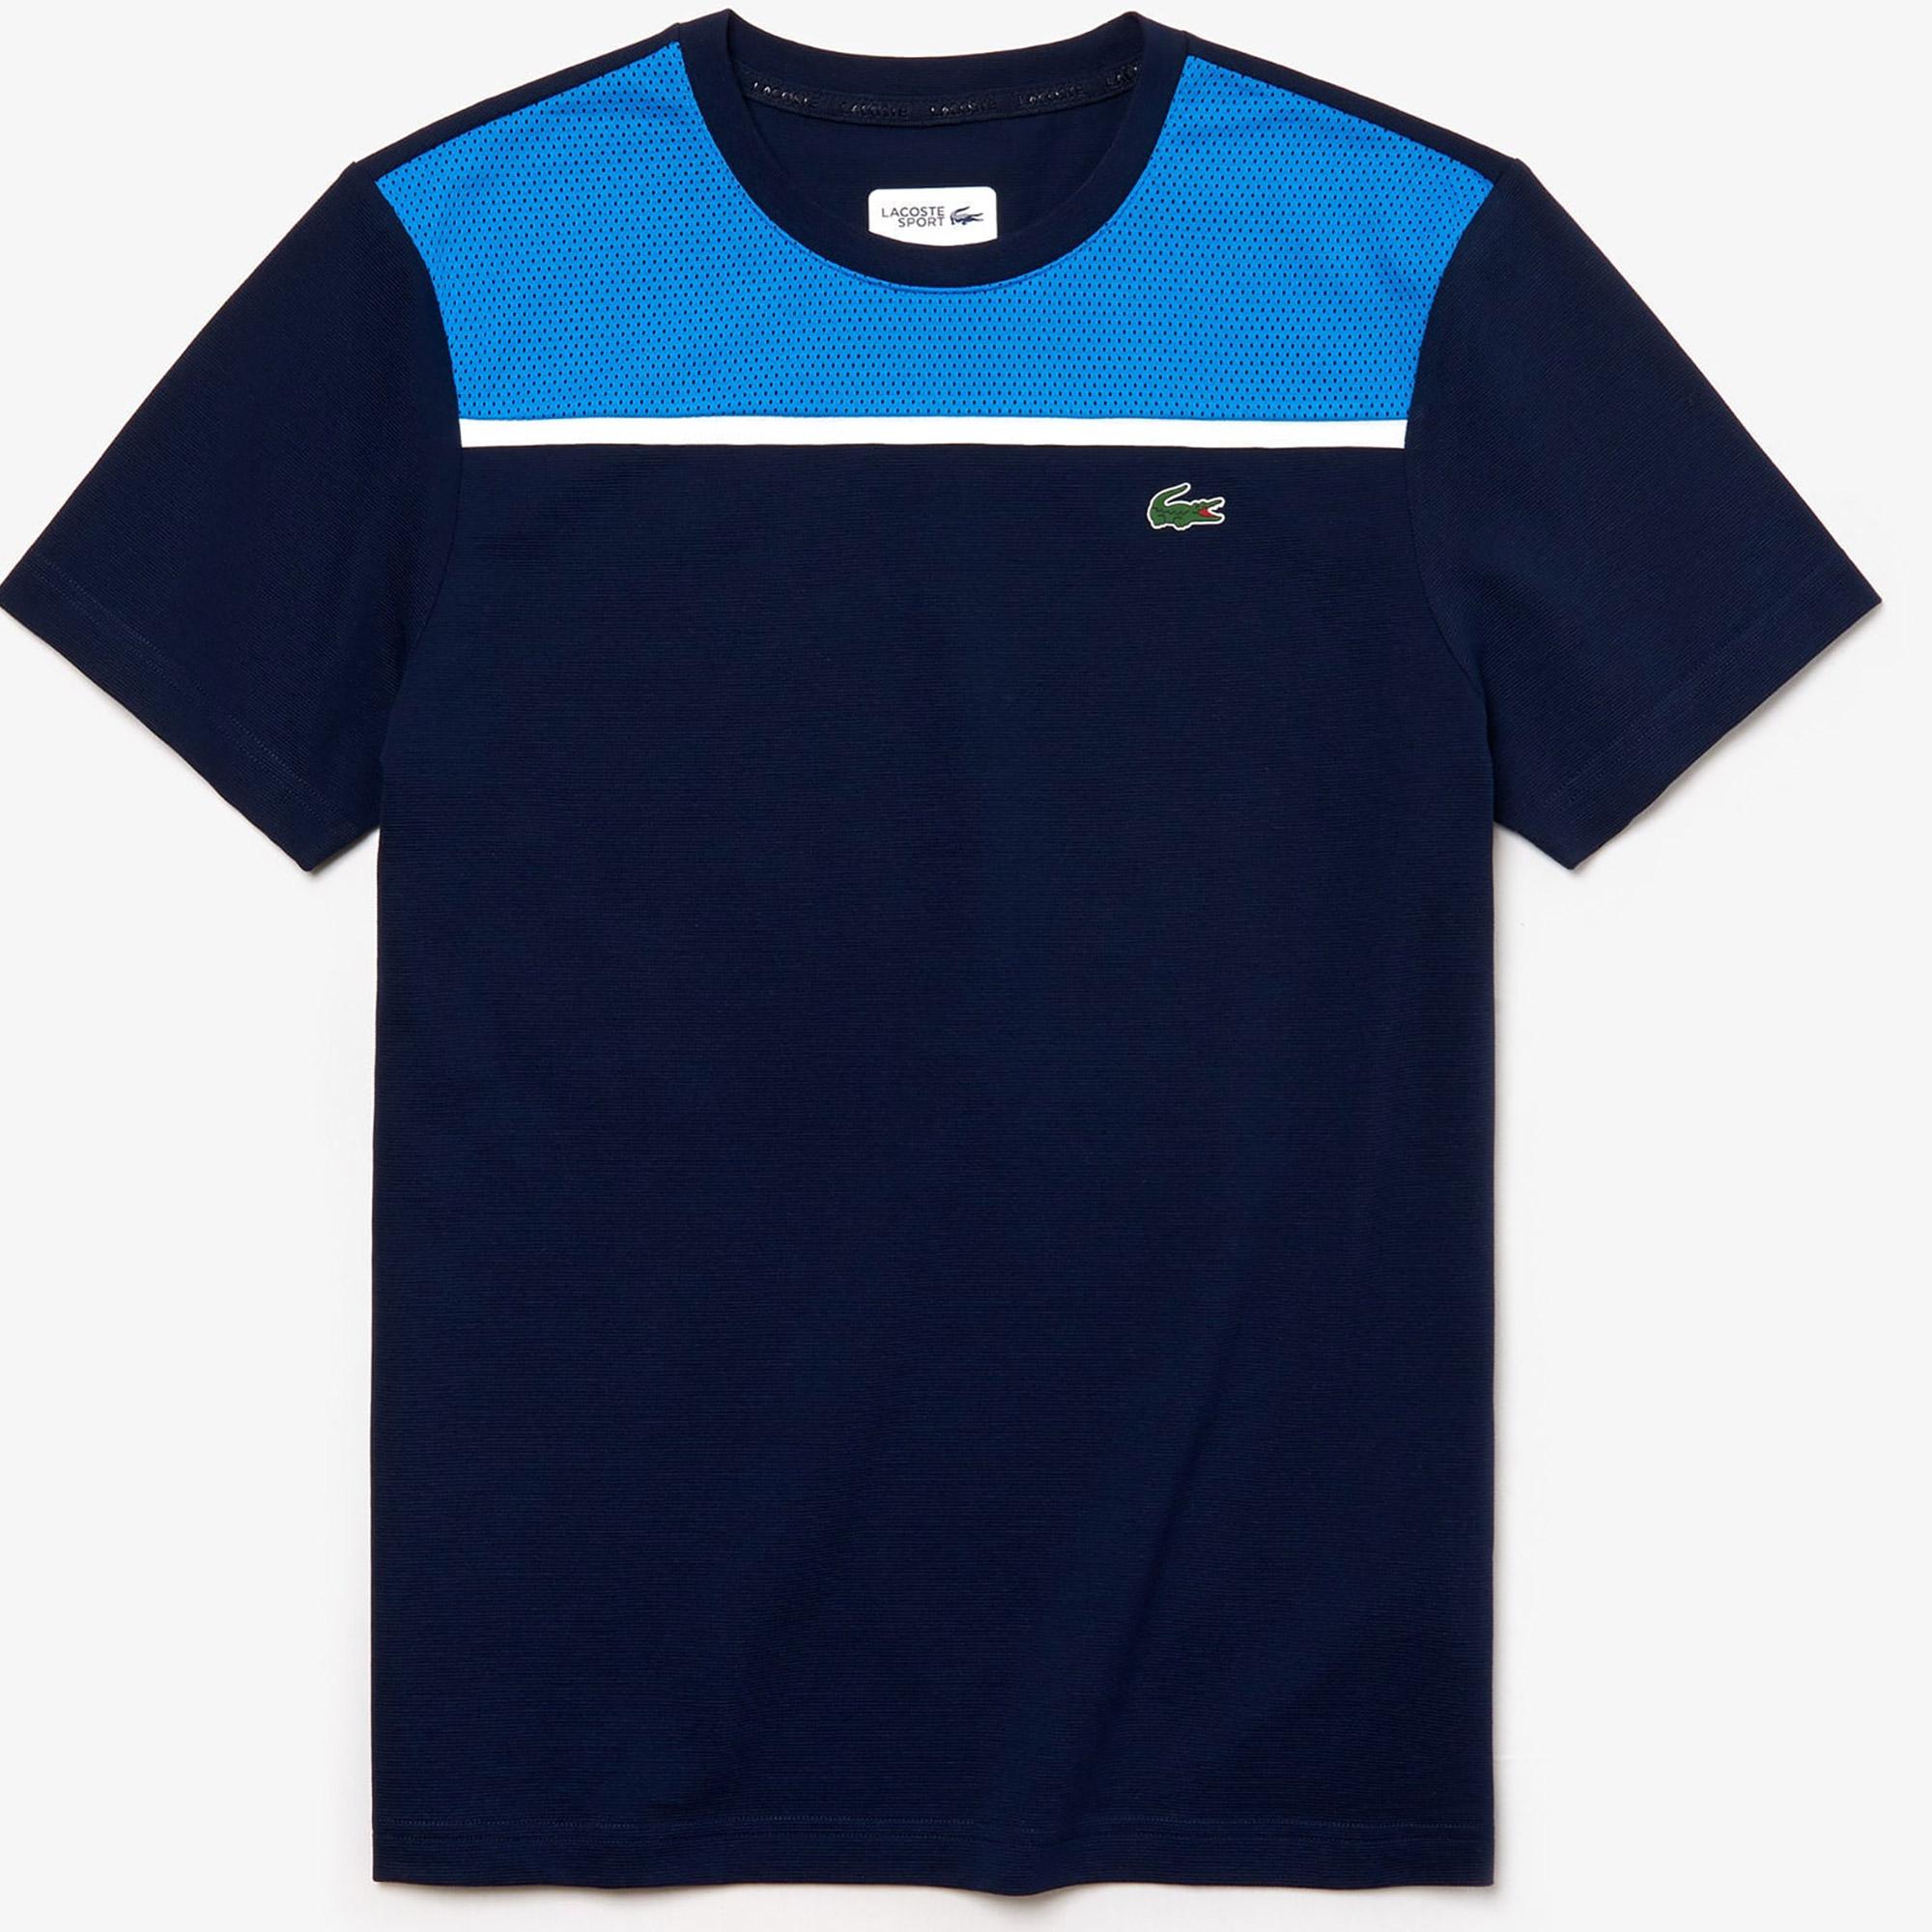 Lacoste Mens Crew Neck T-Shirt - Navy Blue/Blue/White - Tennisnuts.com